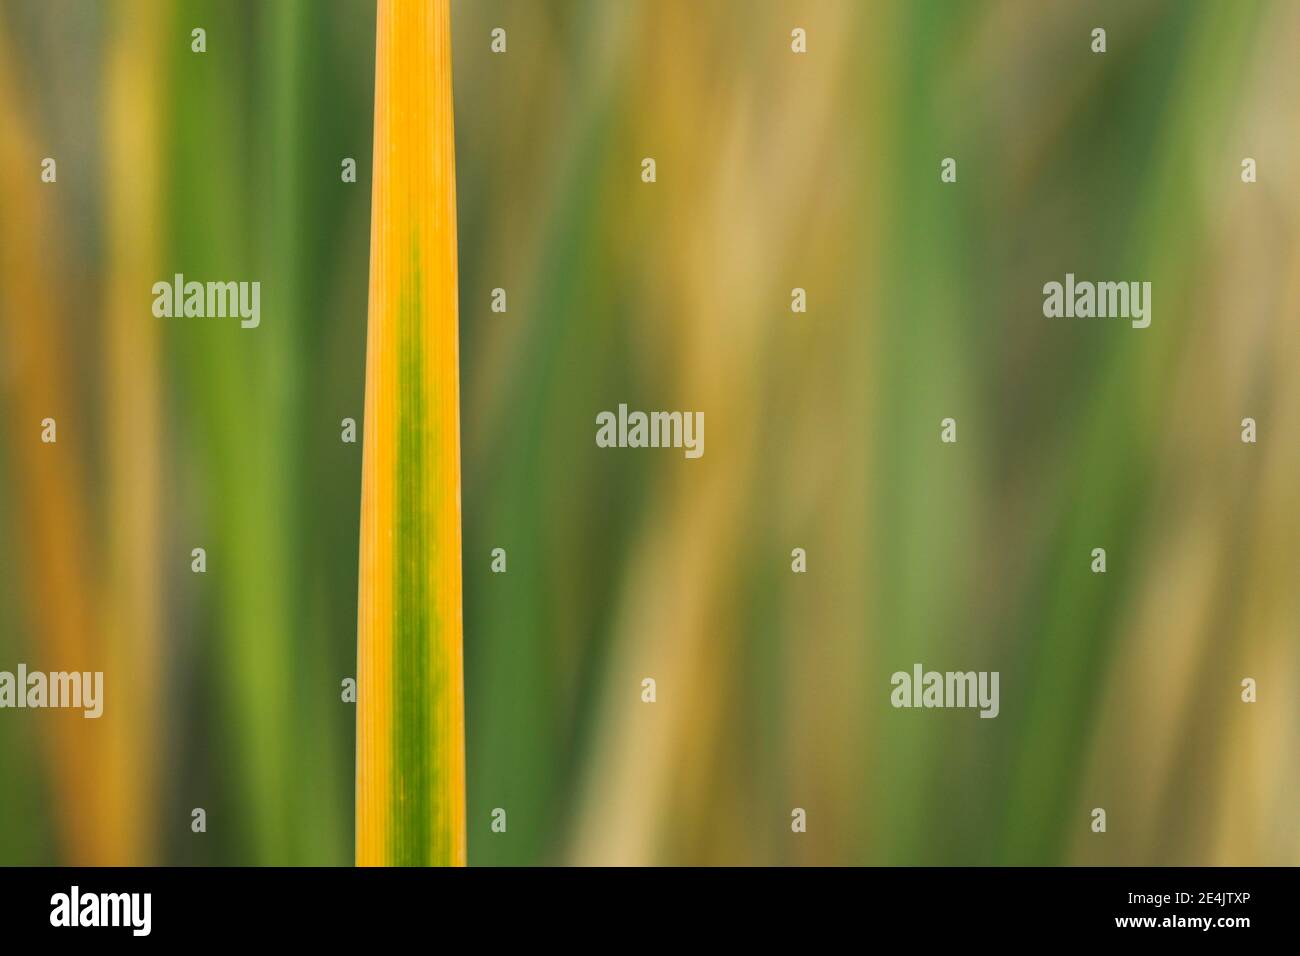 Marram Grass, Insel Düne, Helgoland, Deutschland Stockfoto